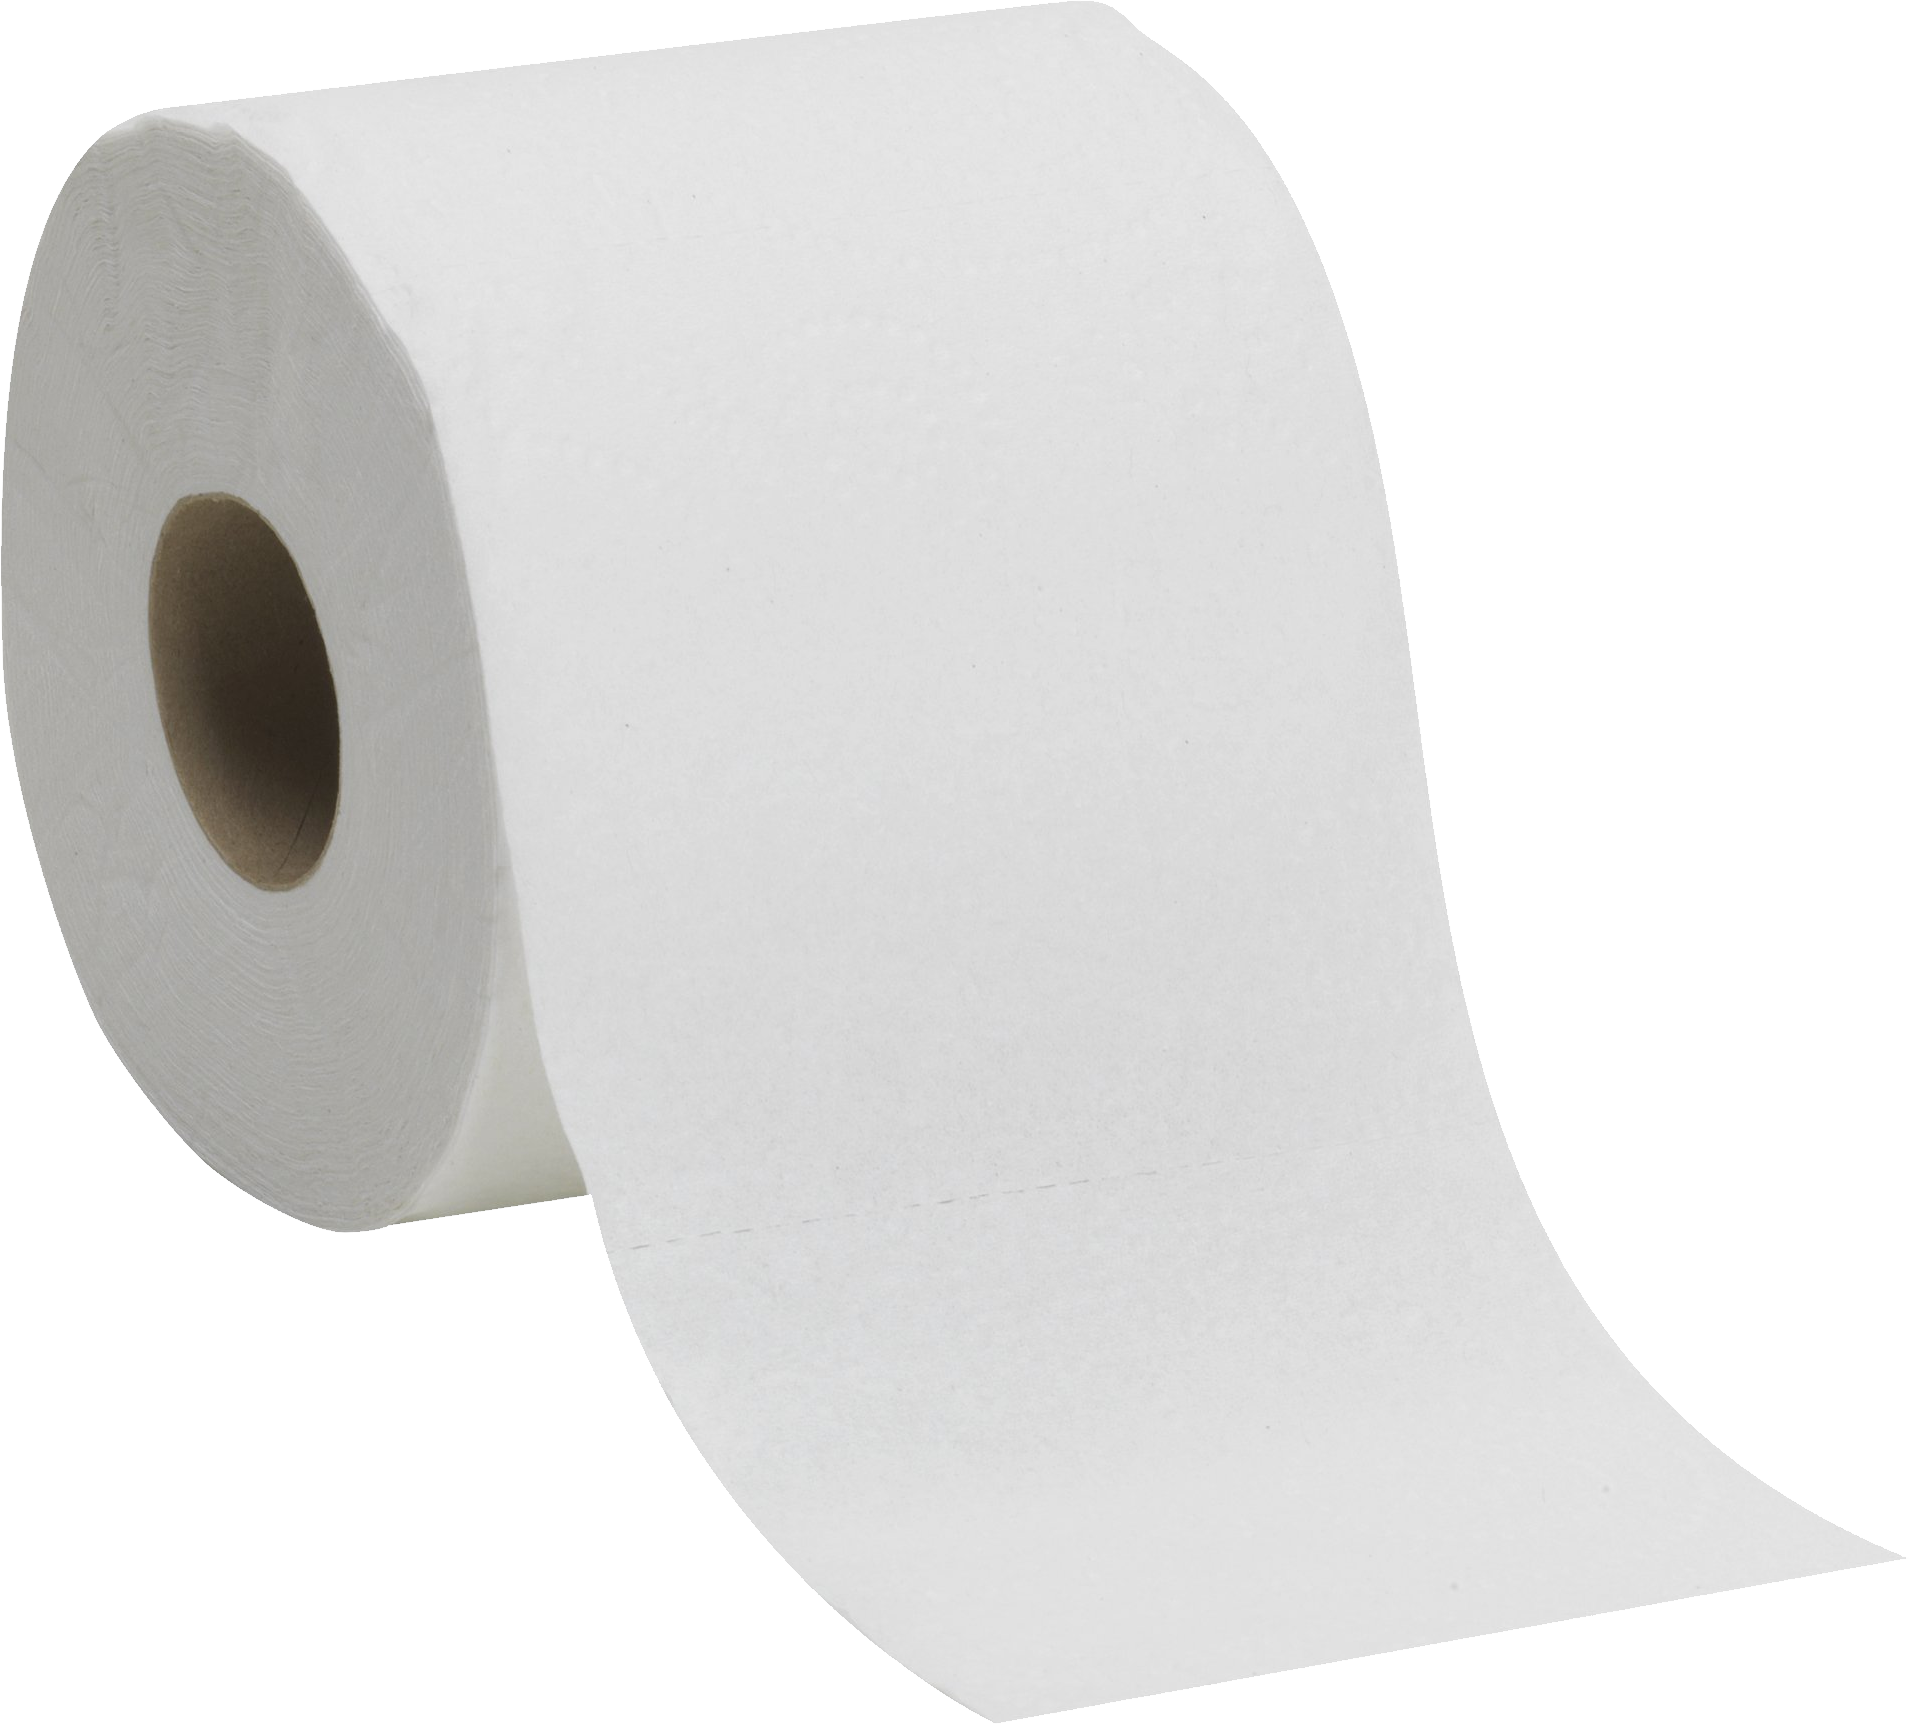 Download PNG image - Toilet Paper Transparent Background 